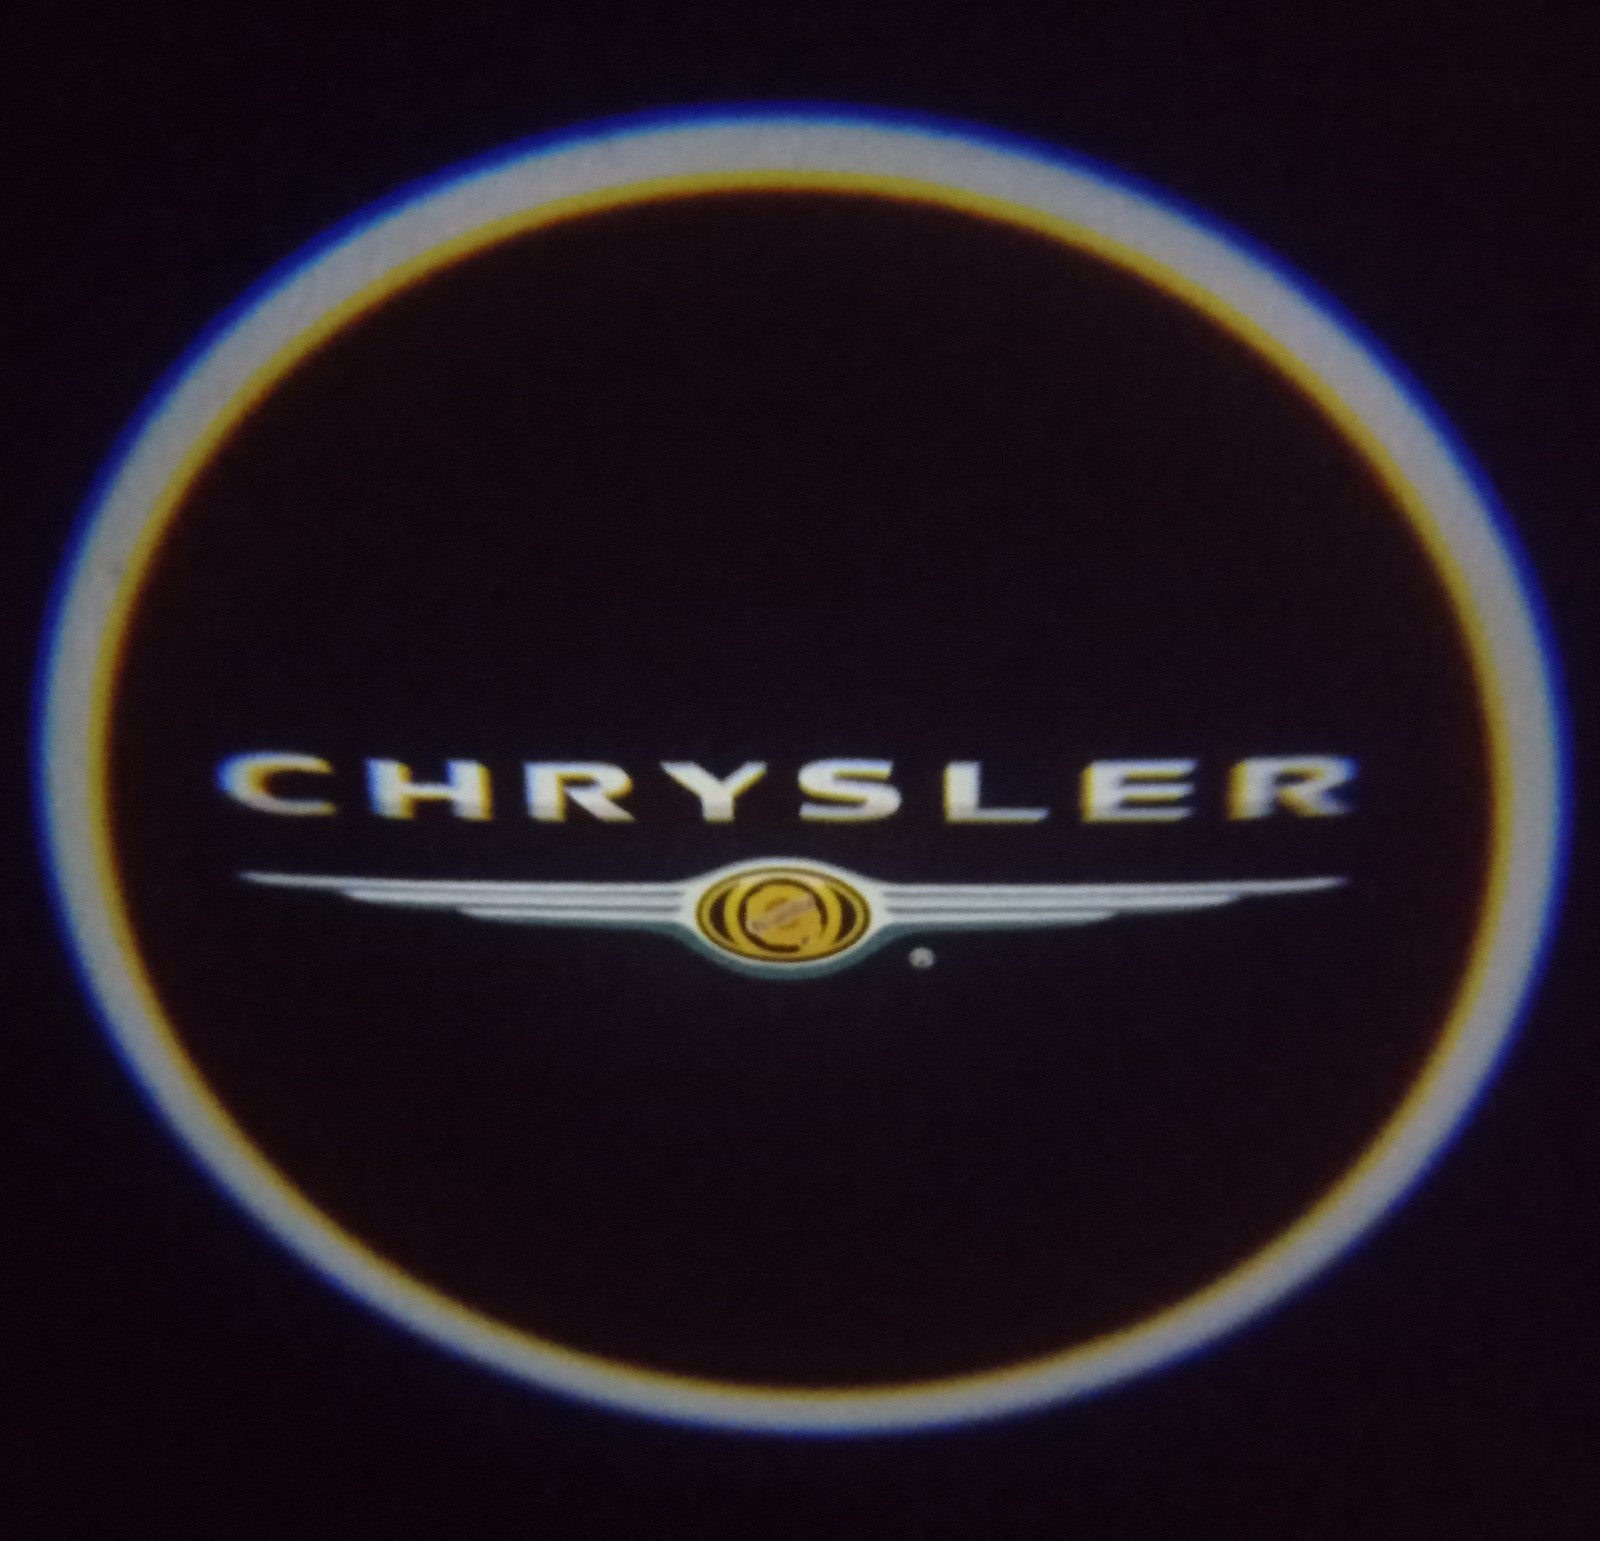 Luzes Cortesia com Logotipo marca Chrysler